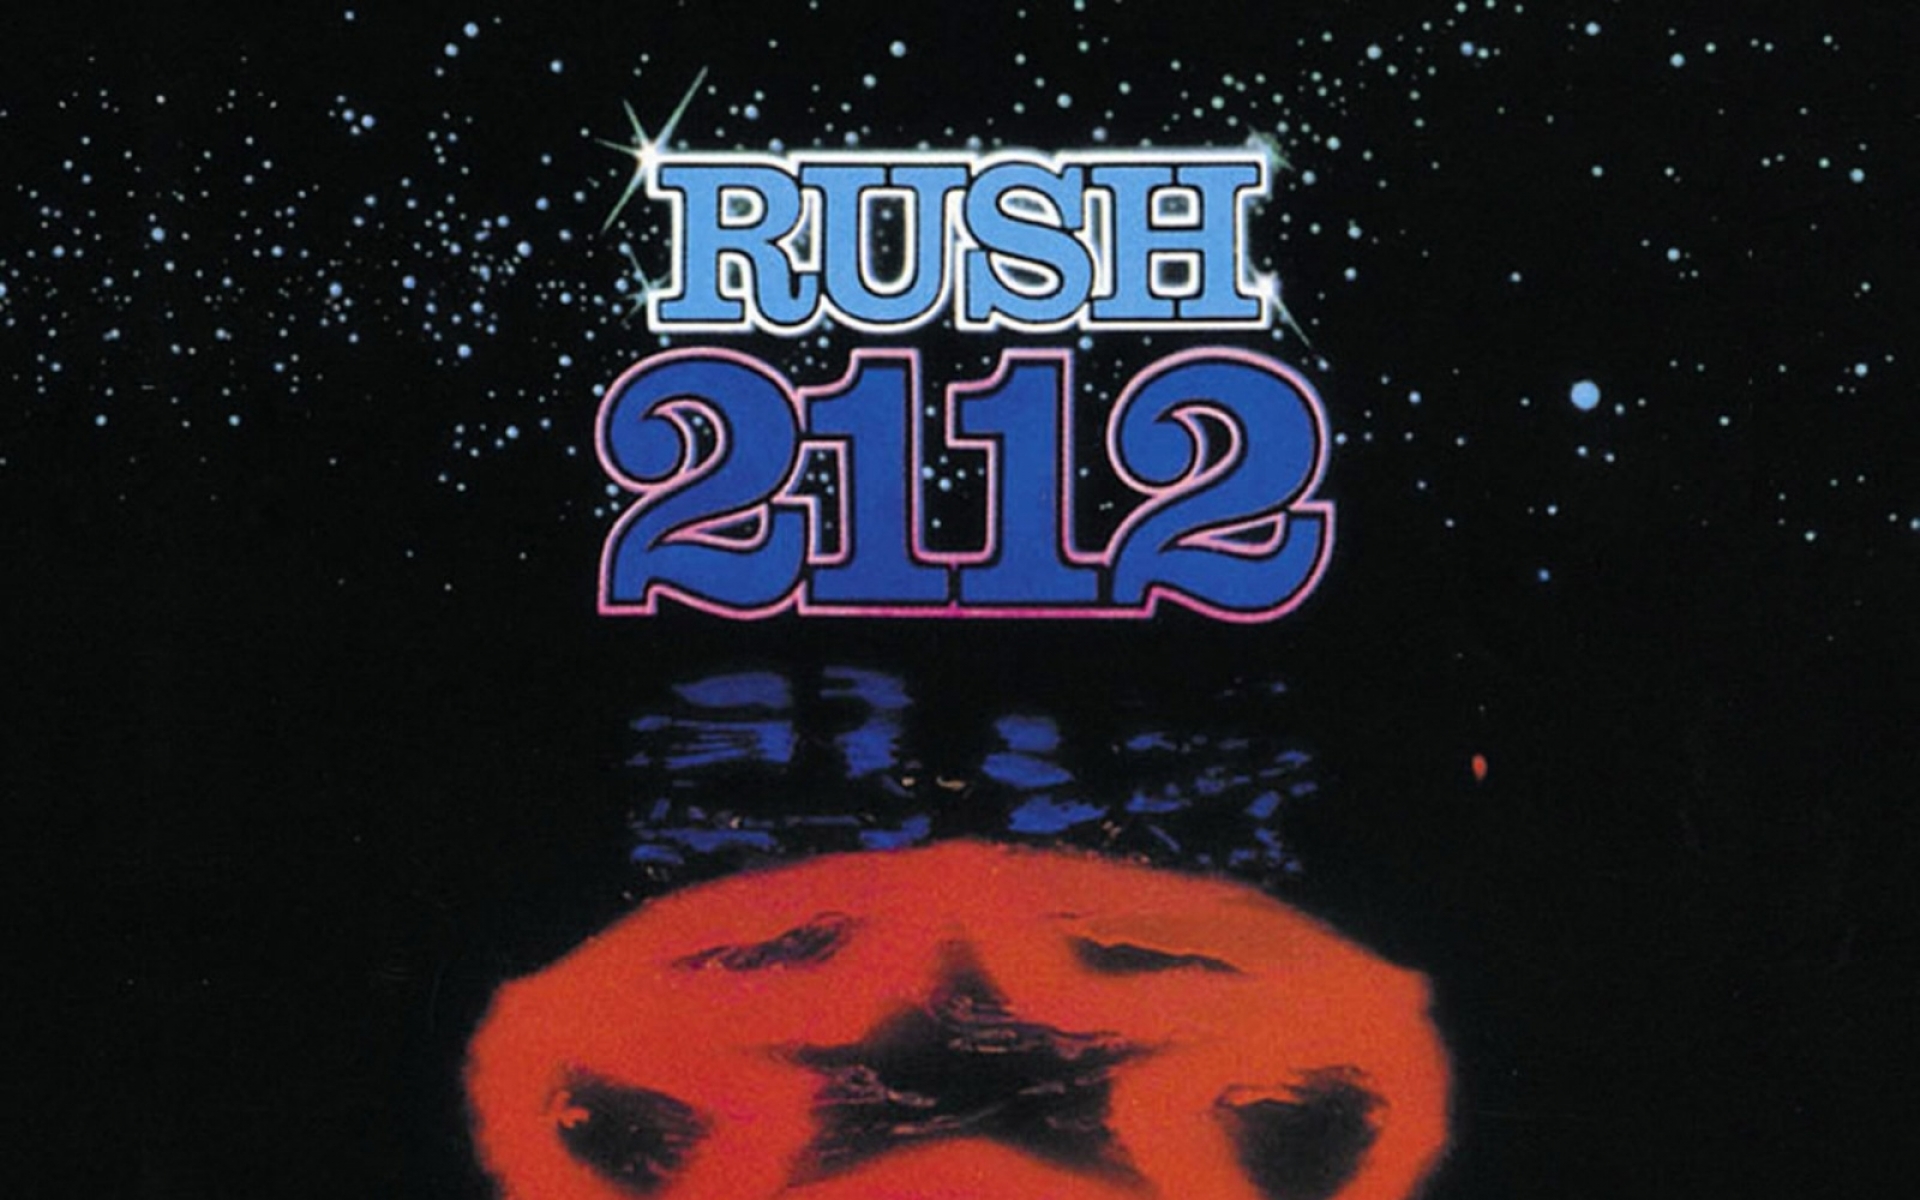  rush classic music bands 2112 album covers bands 70s 1600x120 Art HD